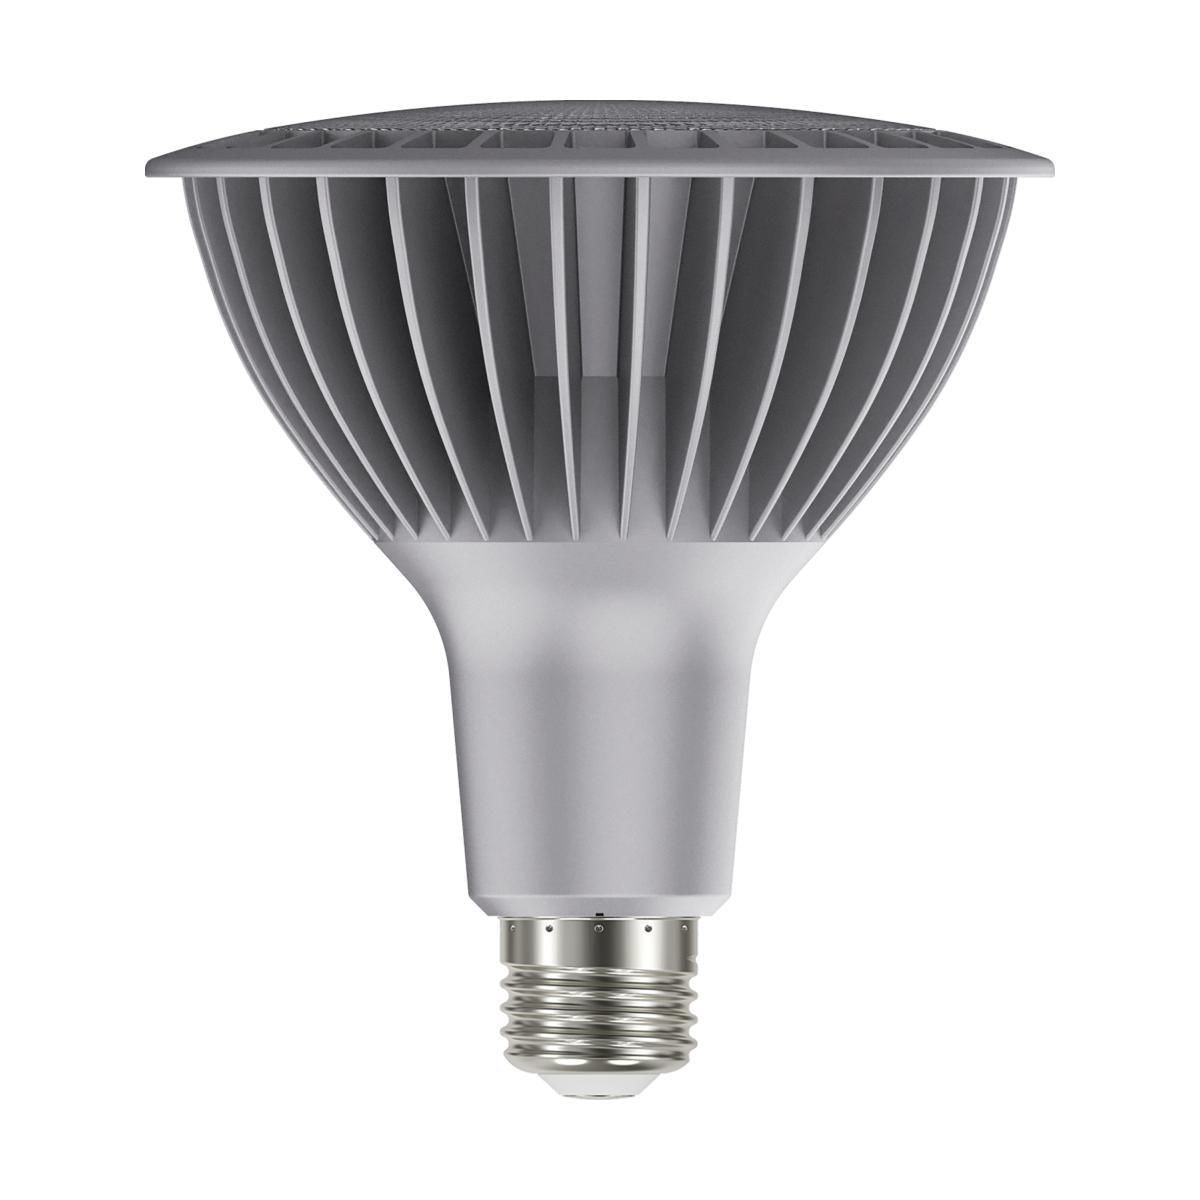 PAR38 Reflector LED Bulb, 27 watt, 2400 Lumens, 3000K, E26 Medium Base, 40 Deg. Flood